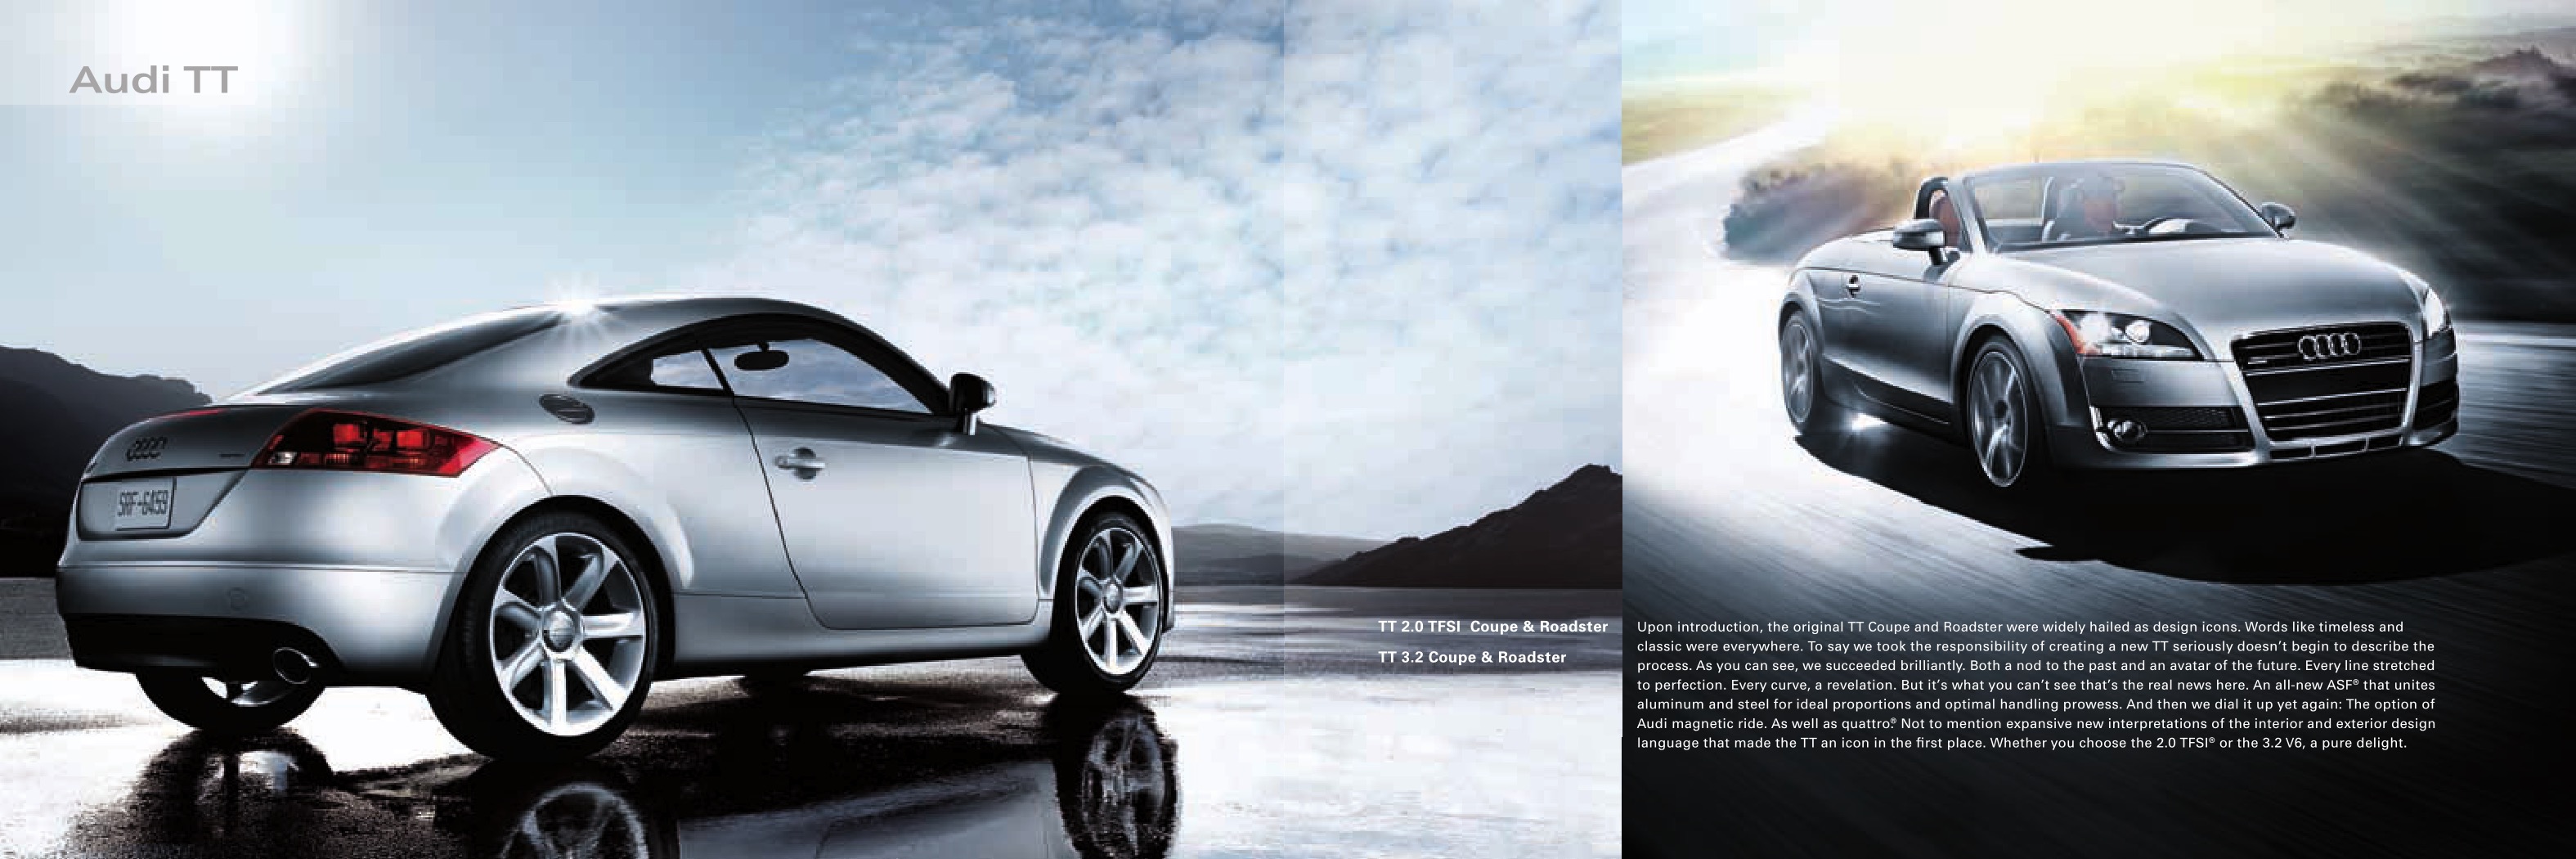 2008 Audi Brochure Page 20